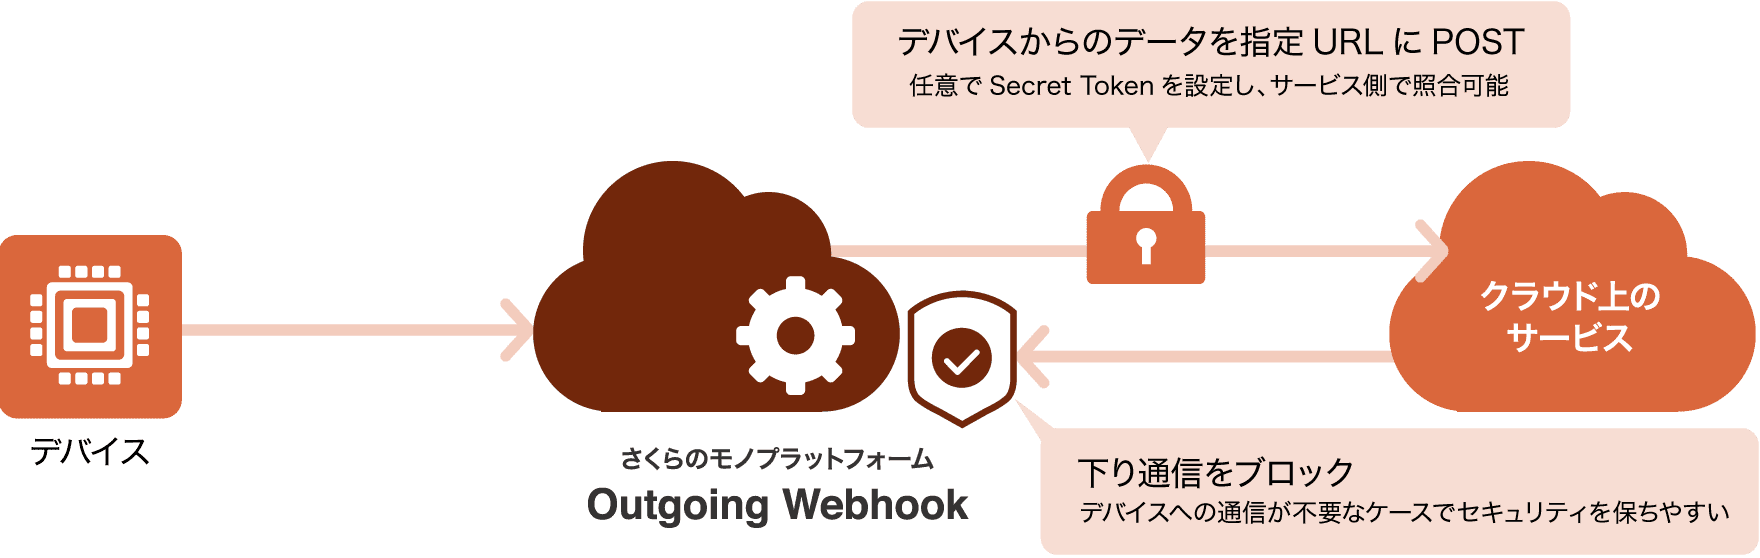 Outgoing Webhook